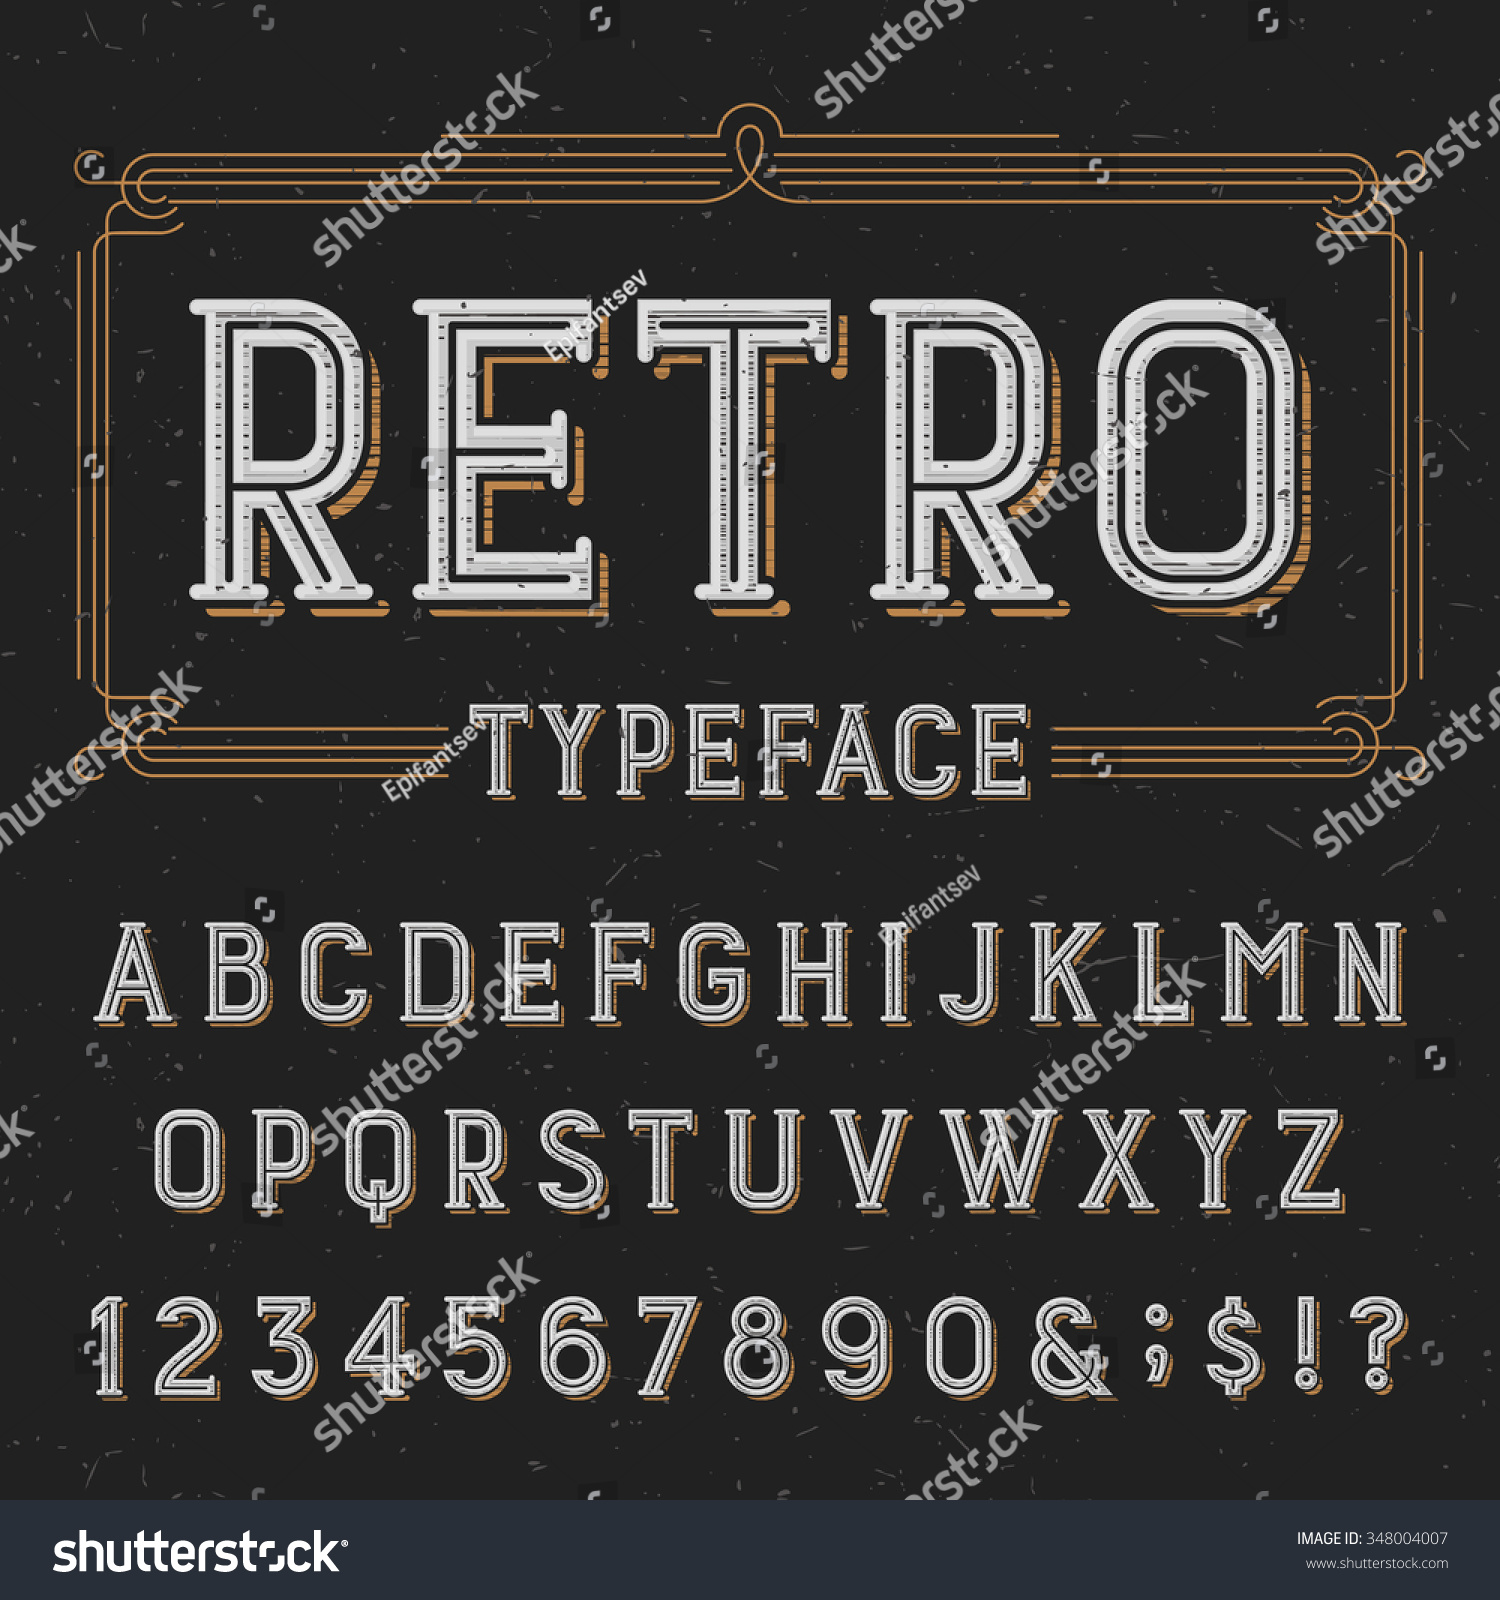 Typeset Distressed Overlay Texture Retro Vector Stock Vector (Royalty ...